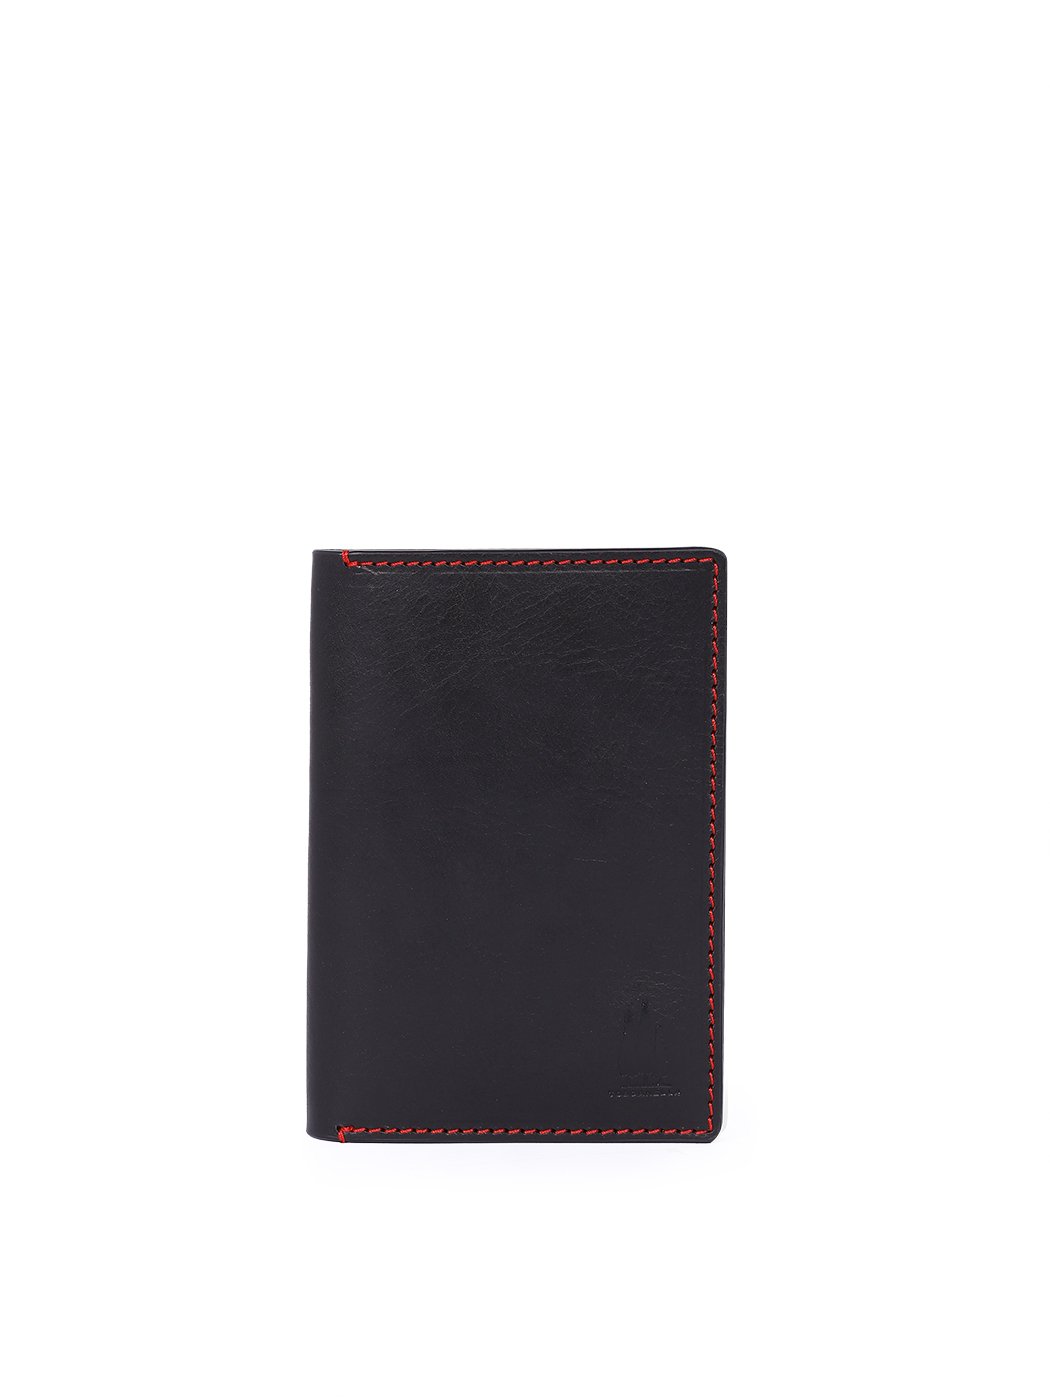 Passport Cover Cuoio Leather Black